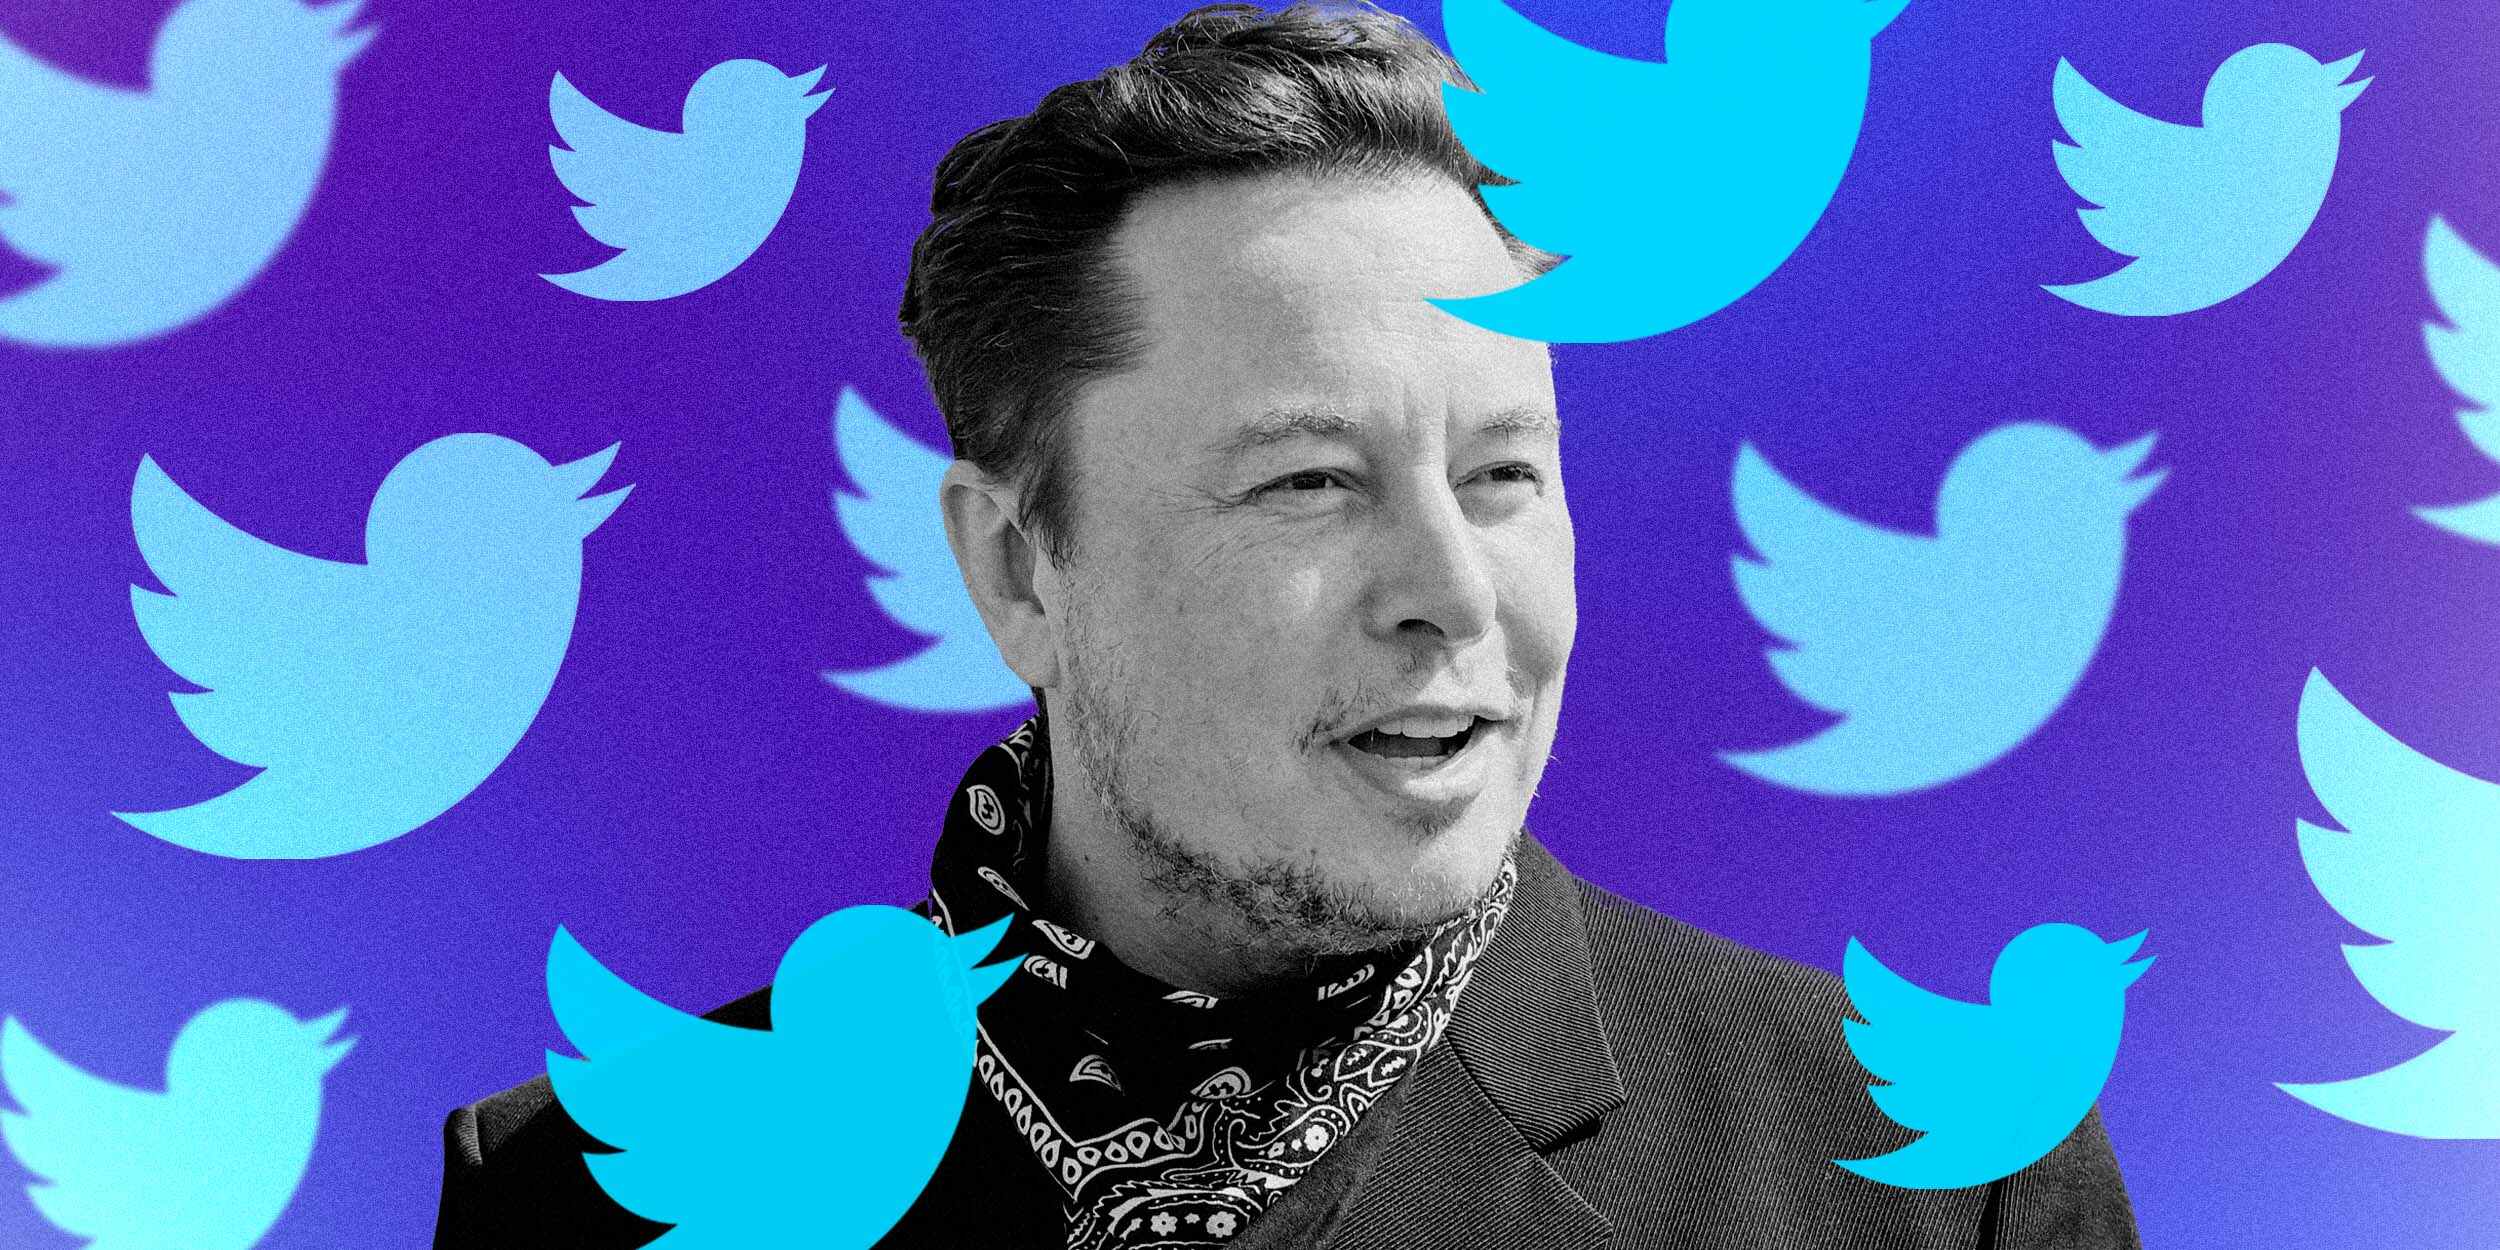 Elon Musk to acquire Twitter for 44 billion dollars